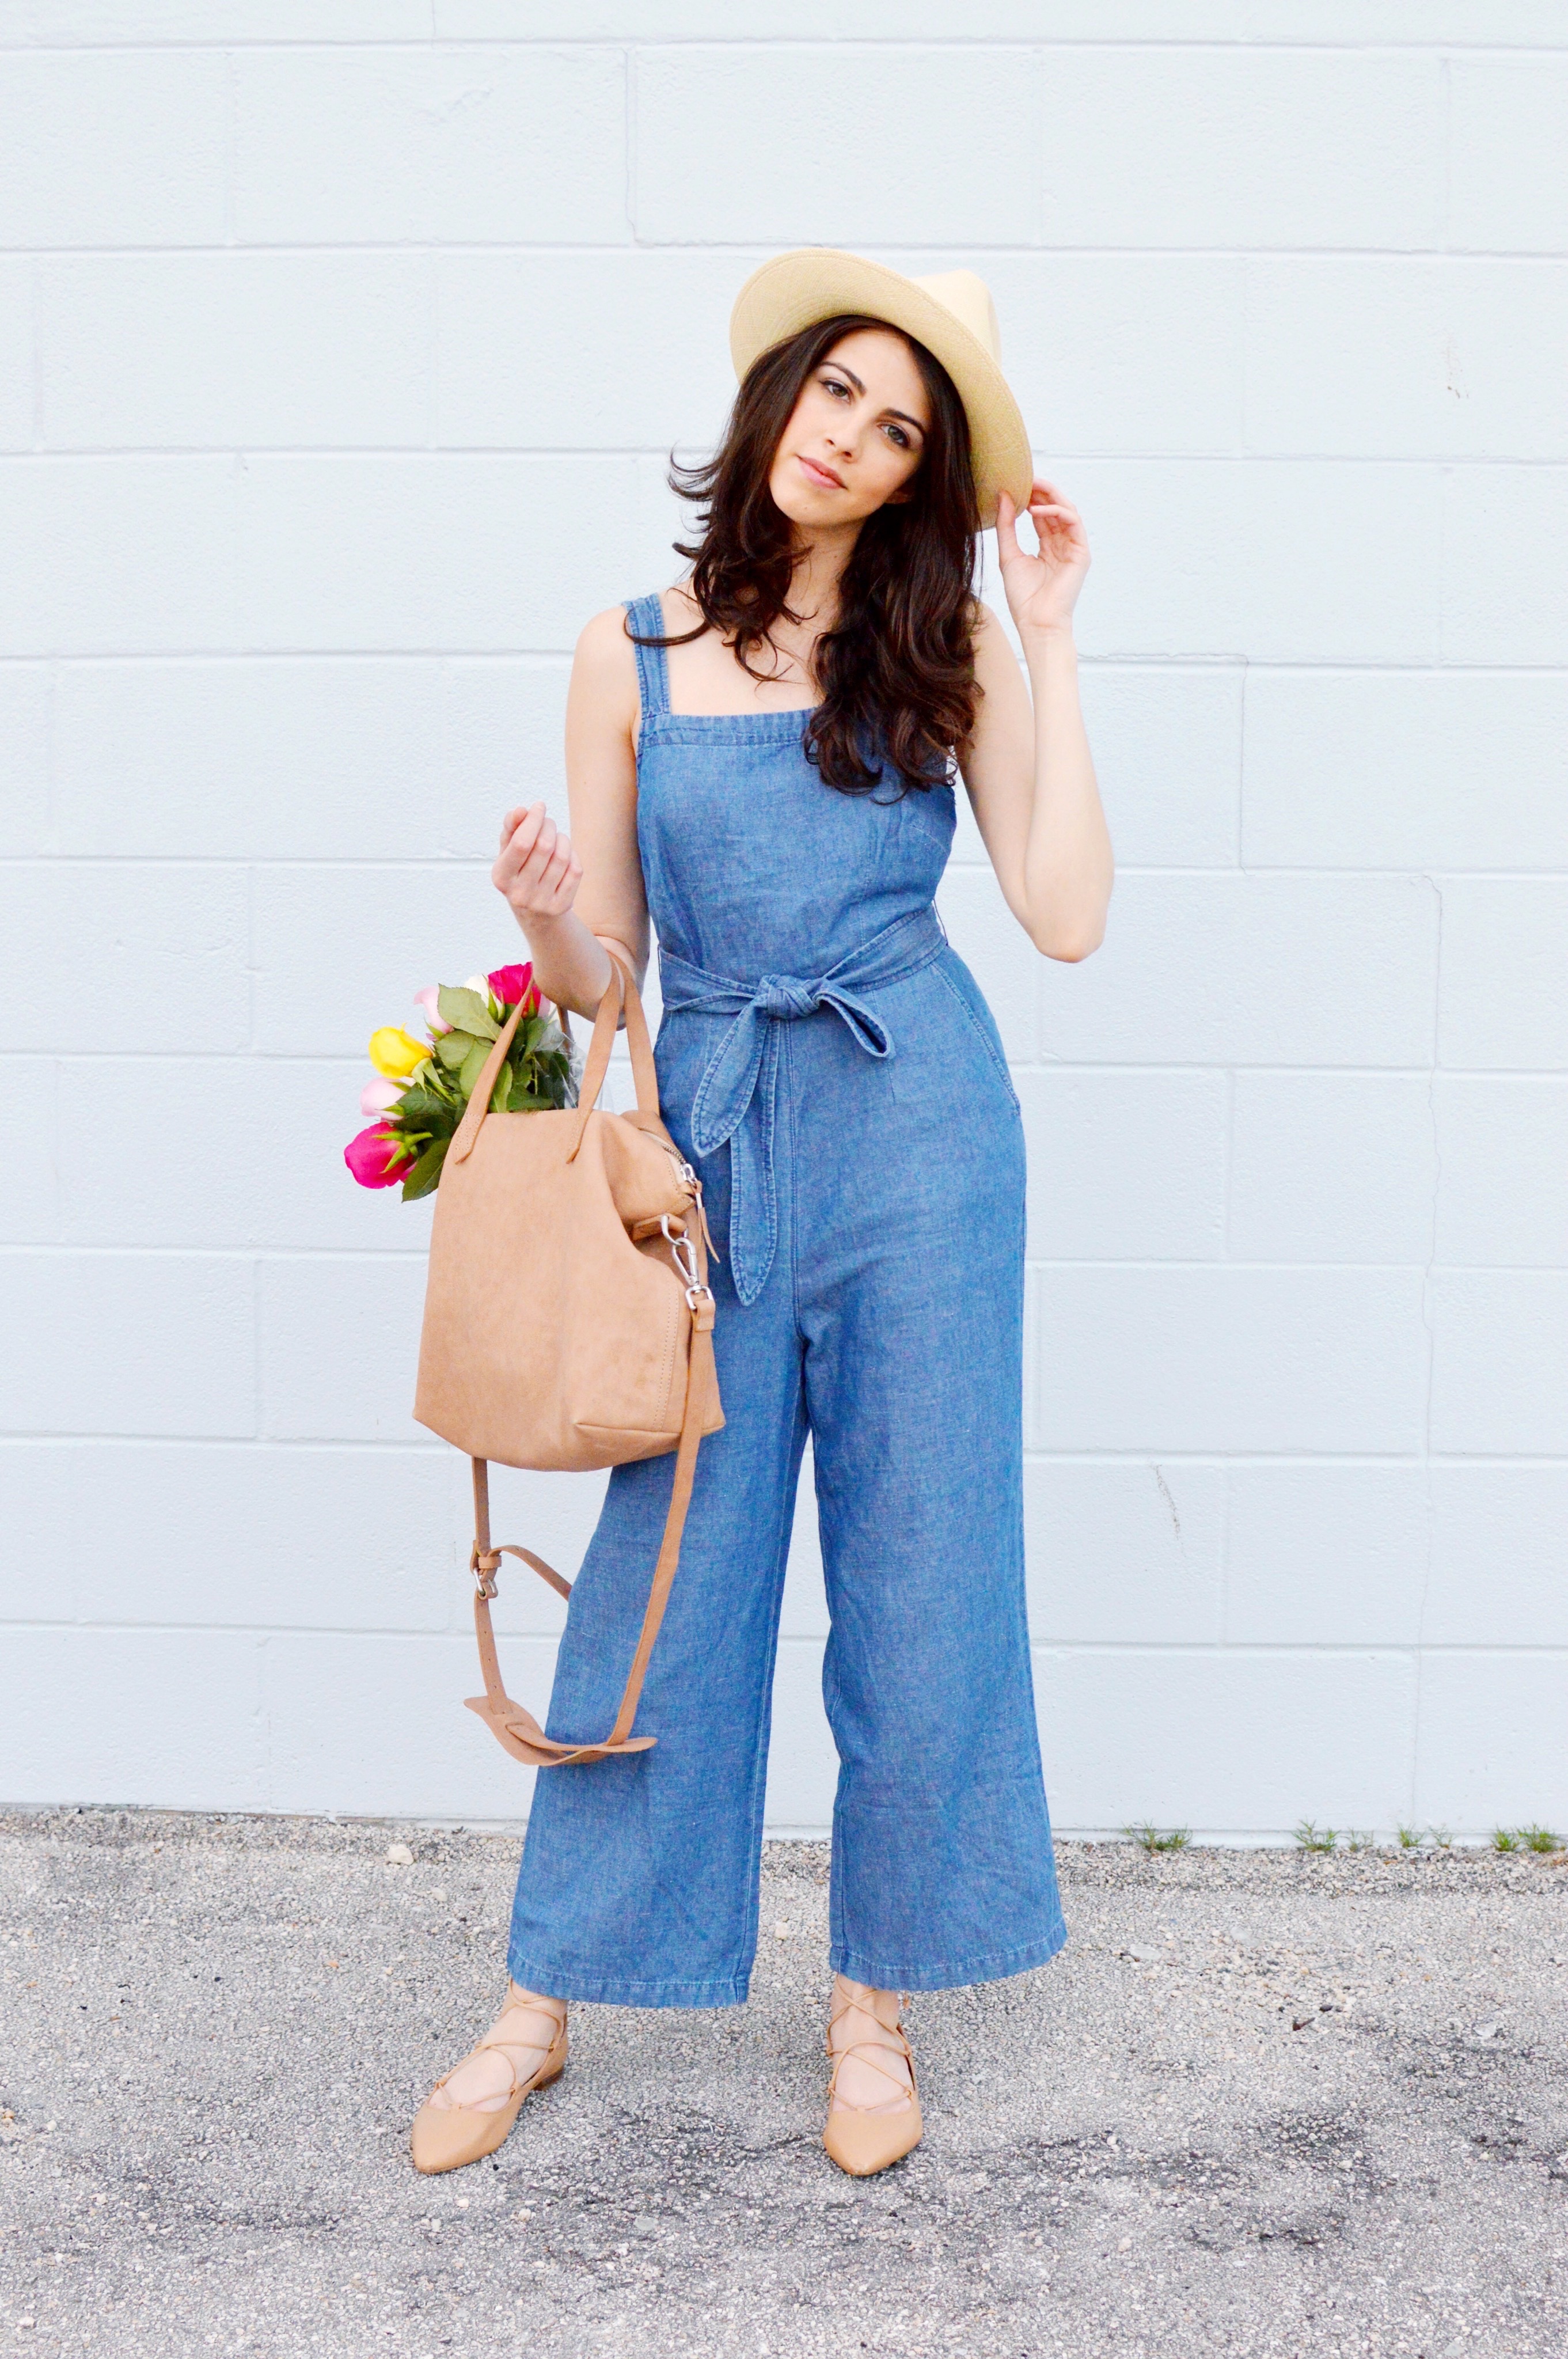 Madewell-spring style-miami fashion blogger